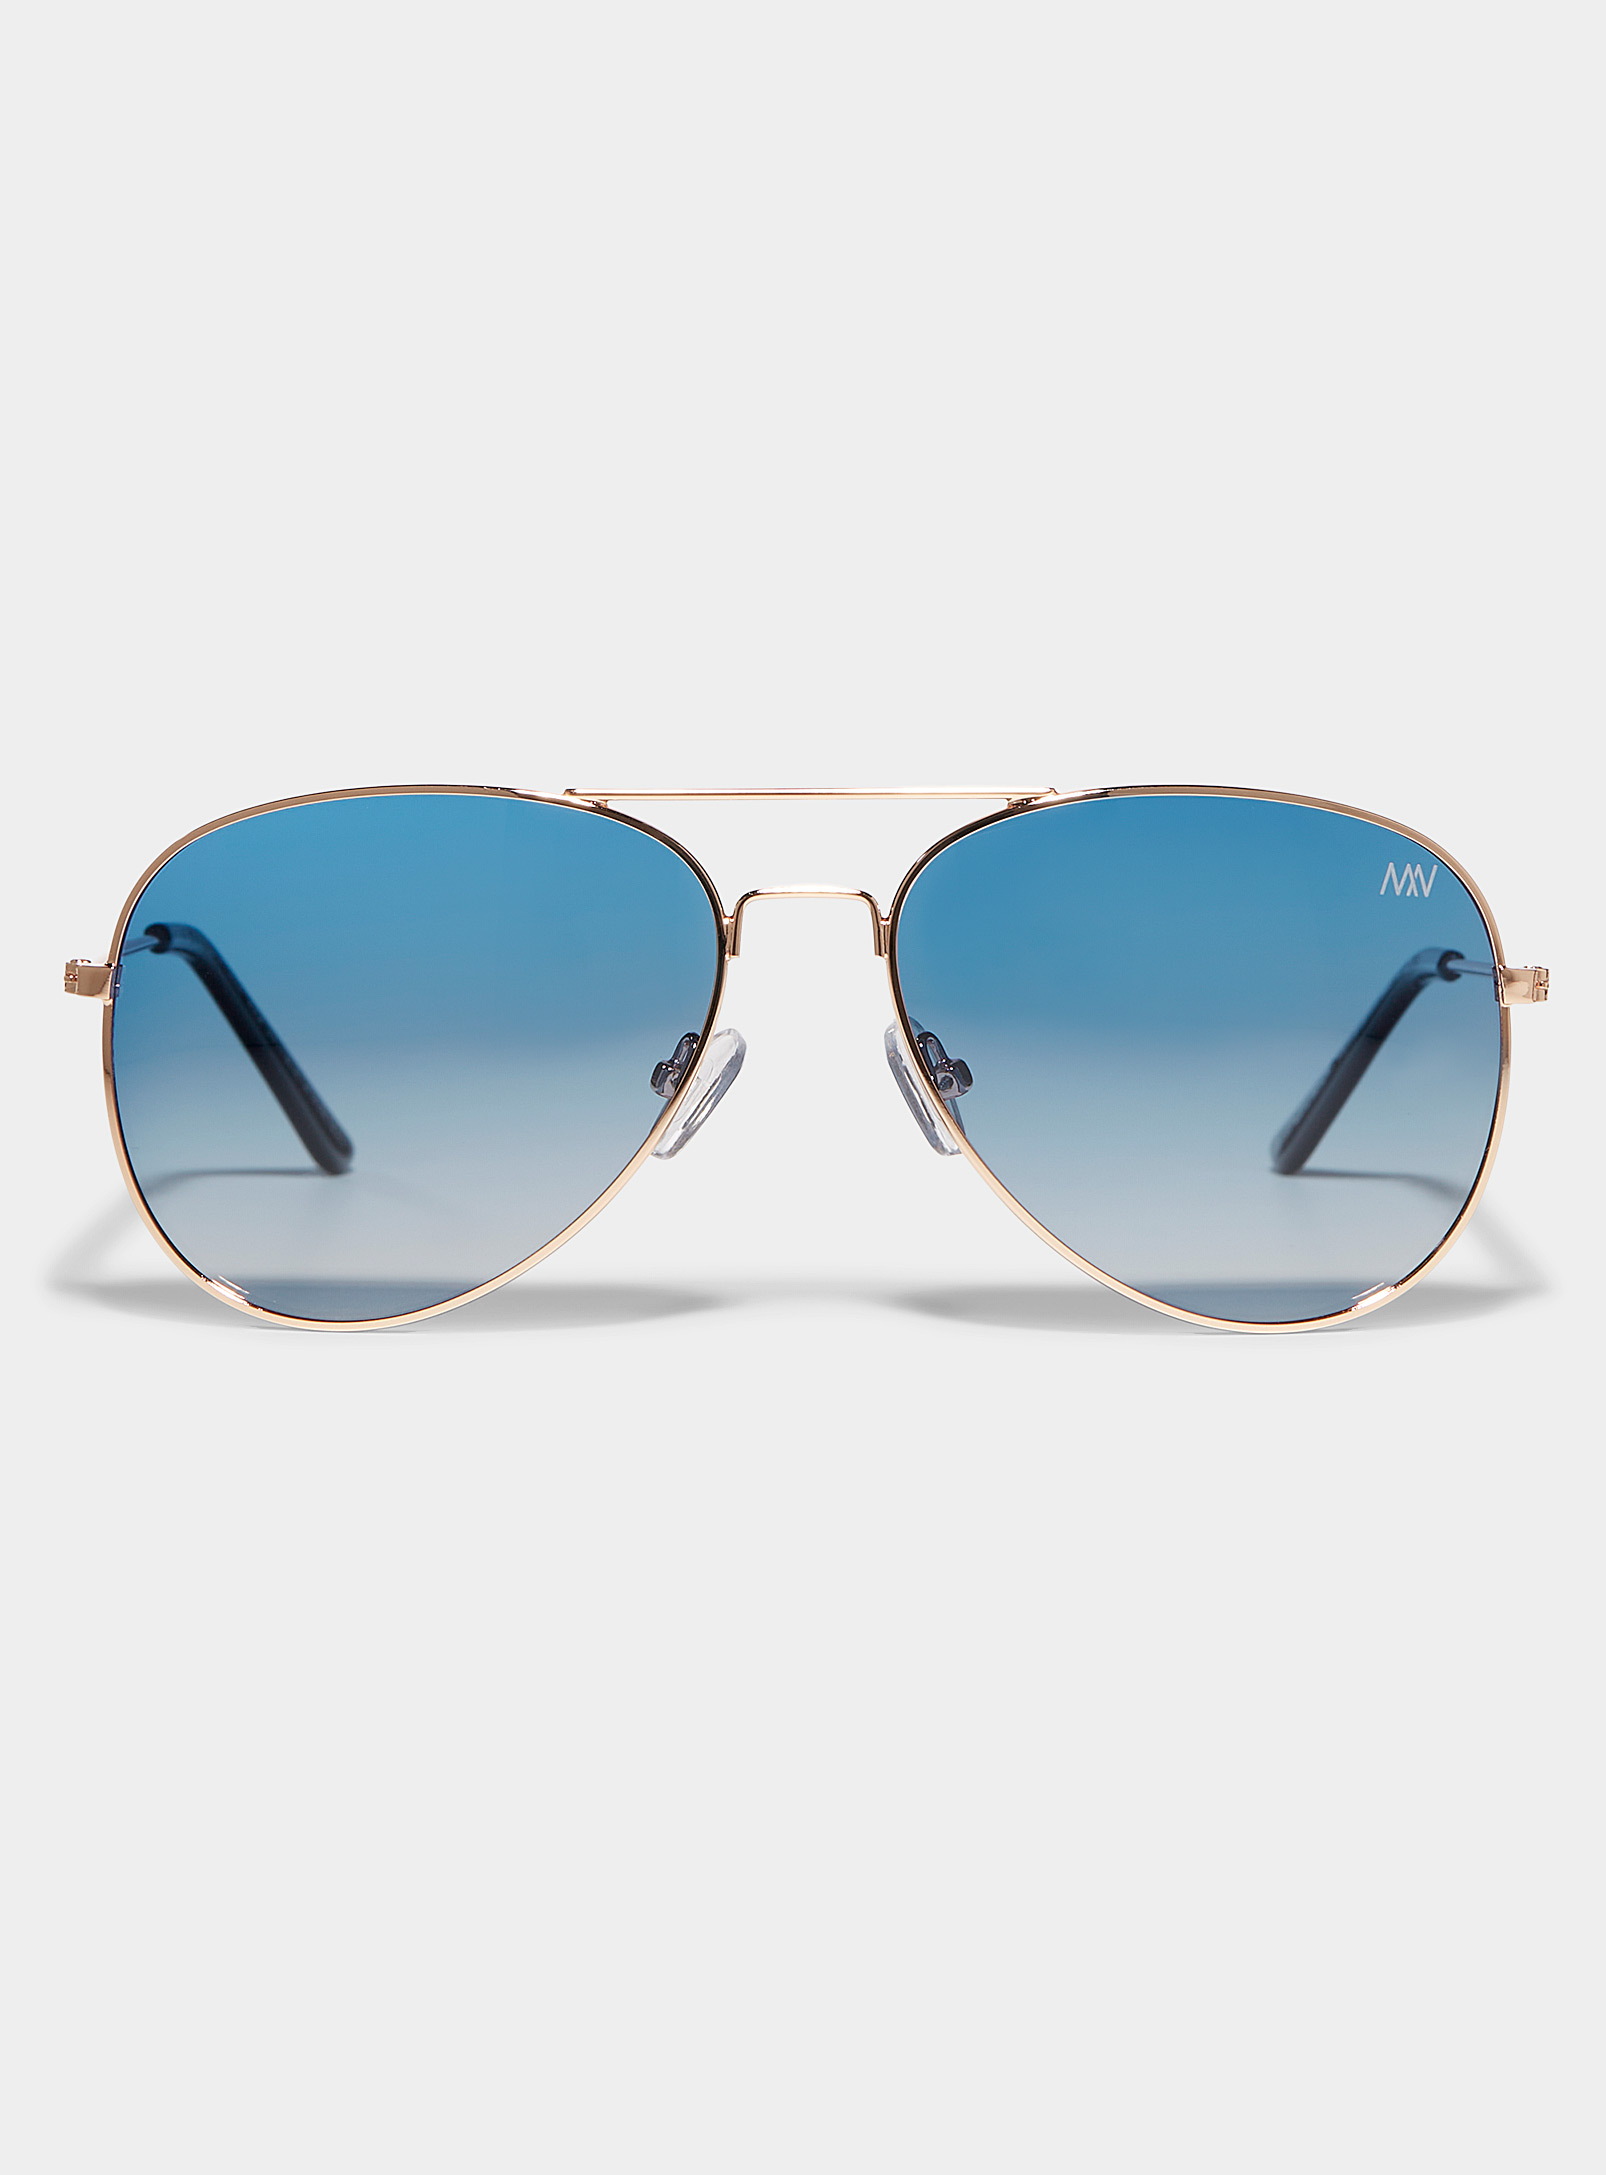 Matt & Nat Sadie Aviator Sunglasses In Patterned Blue